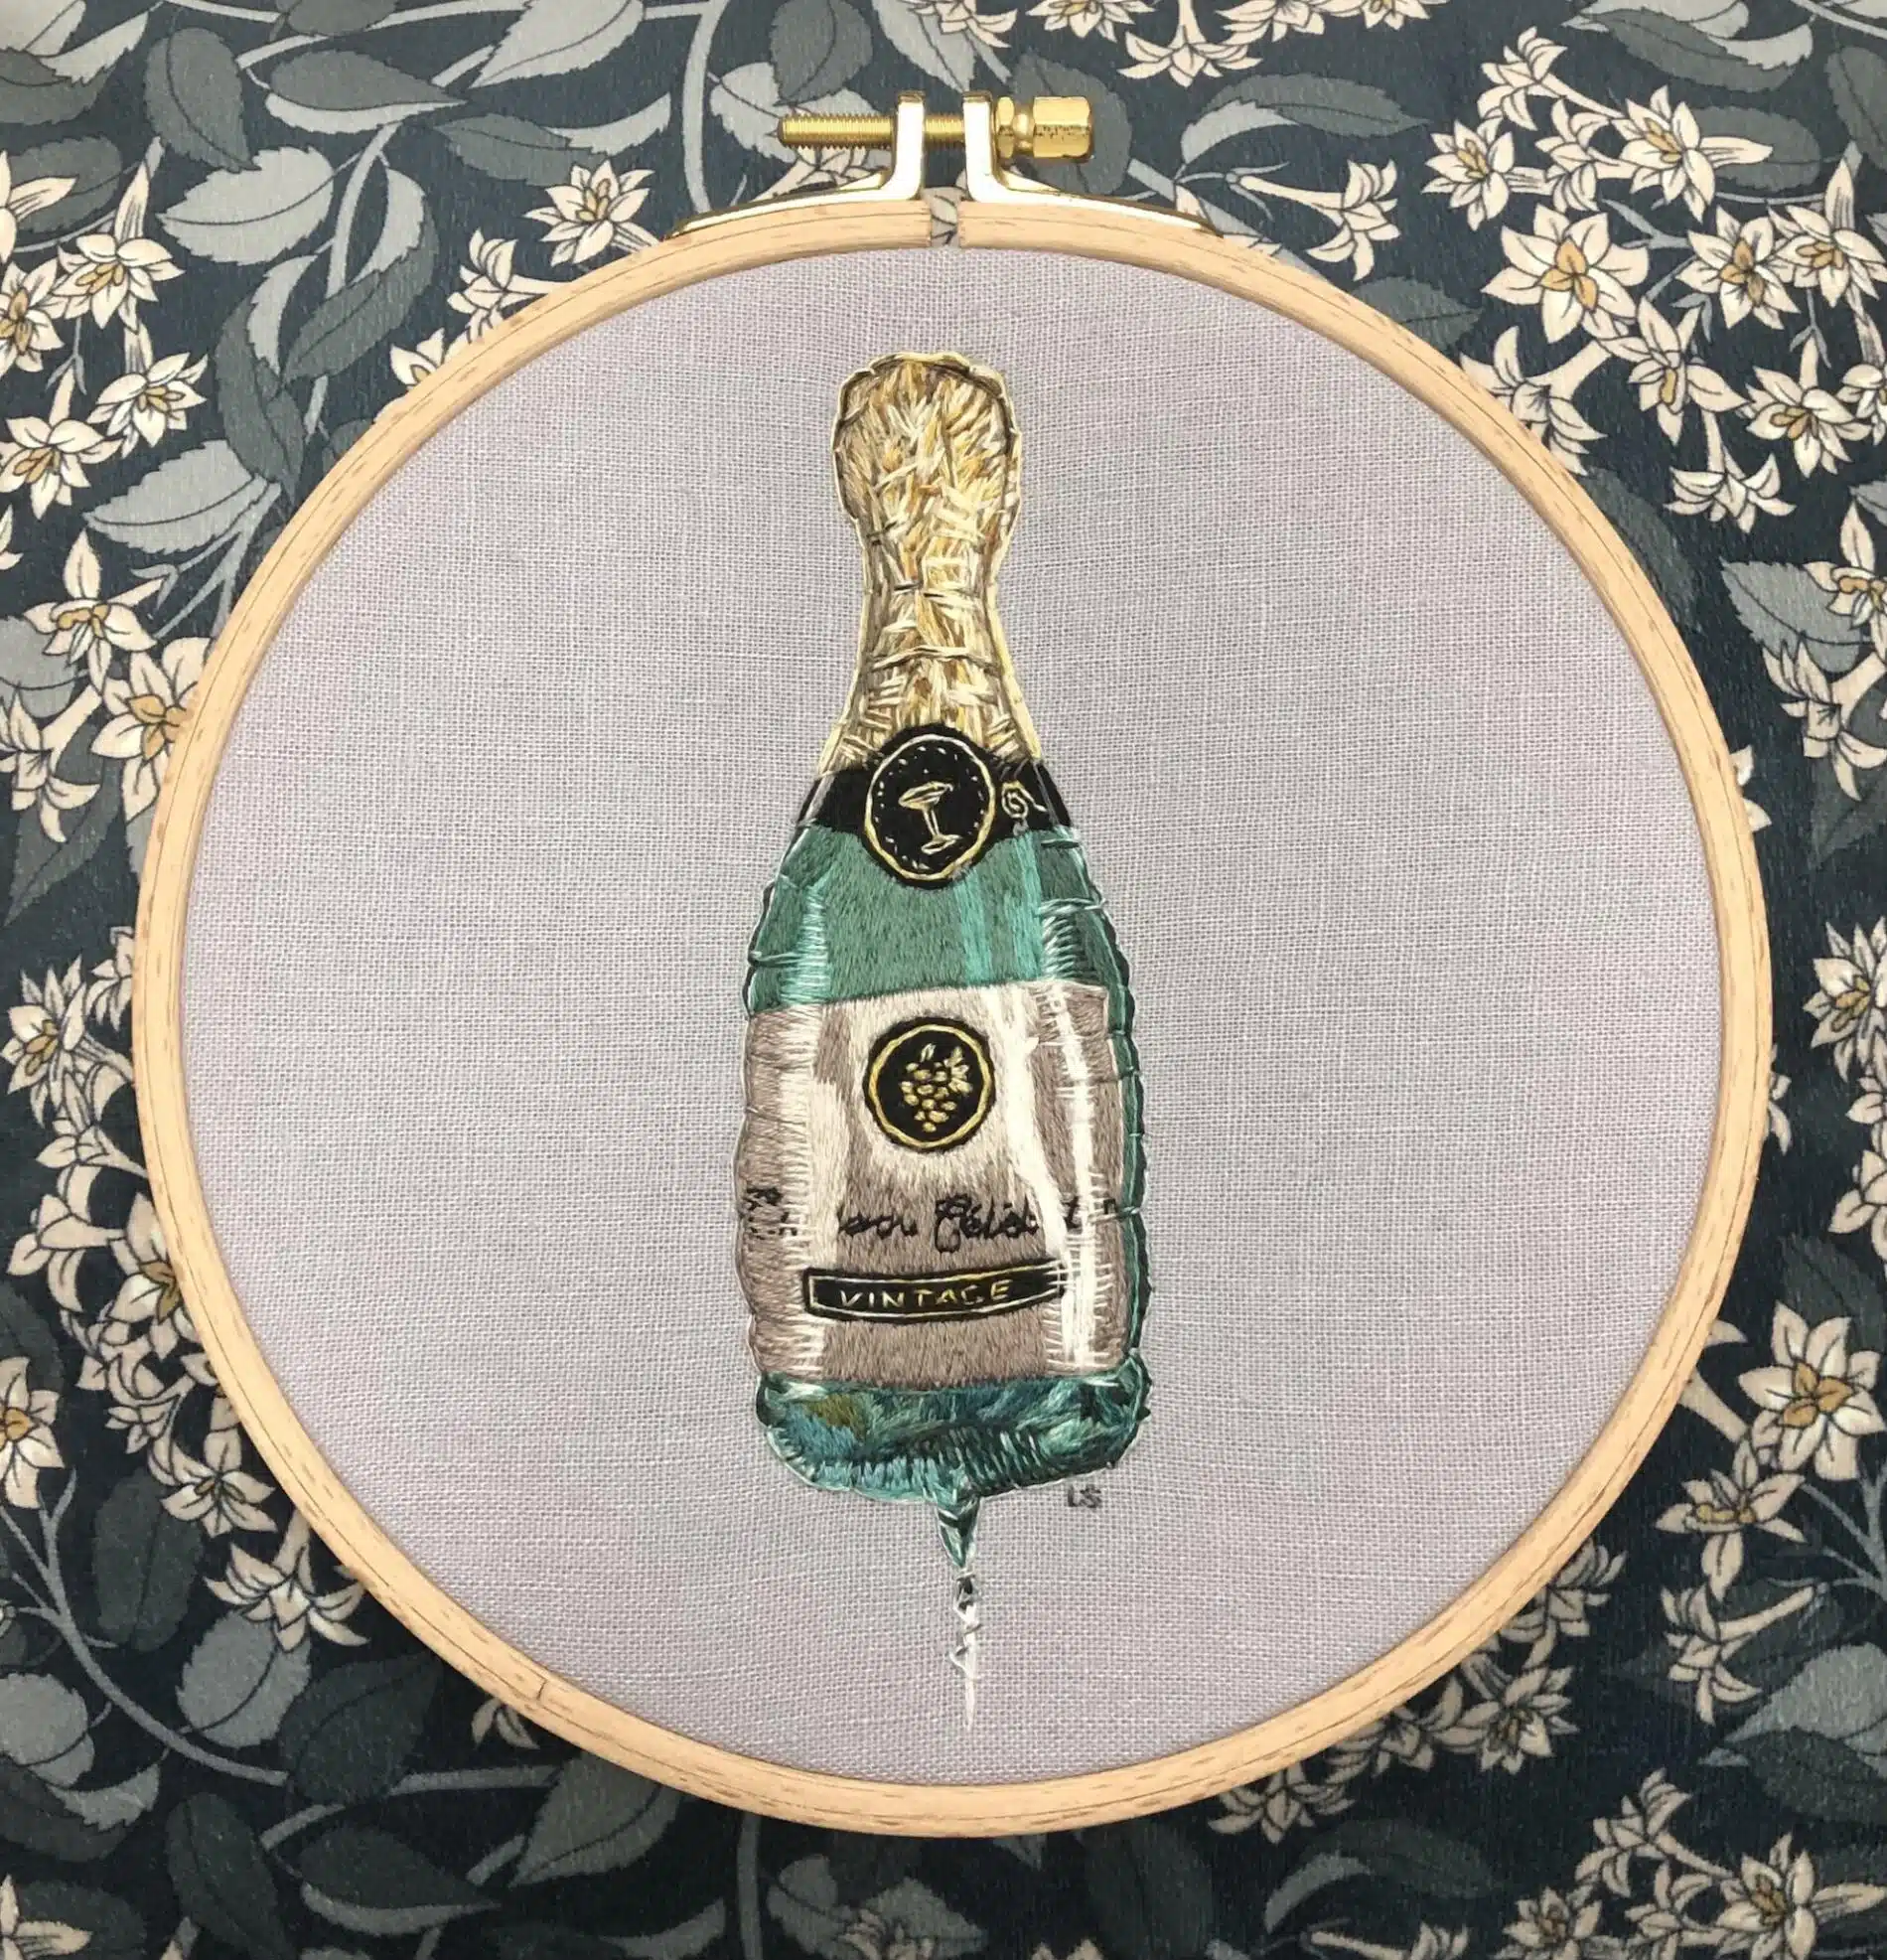 Lucy Simpson bordados fotorealistas champan